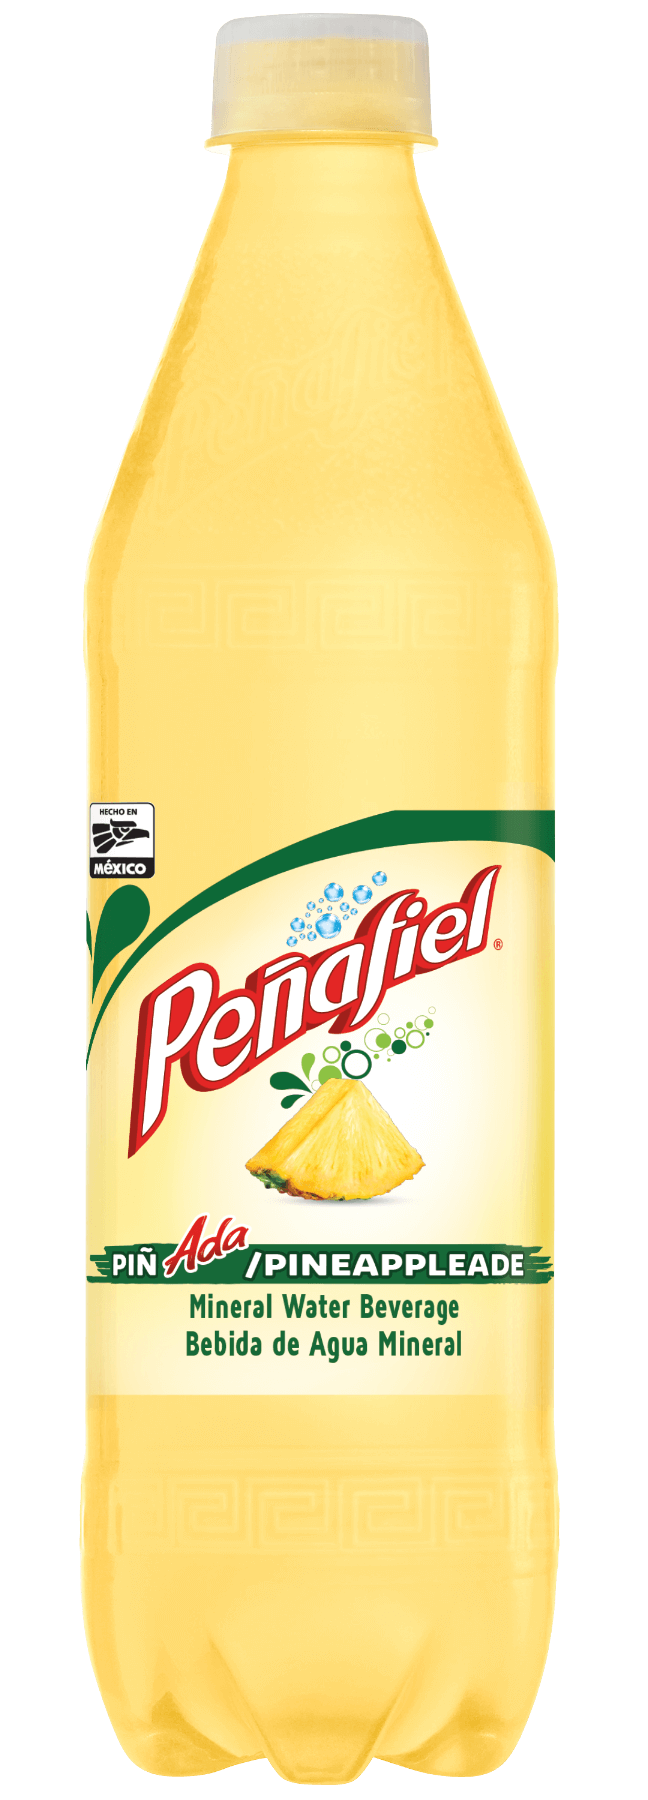 Peñafiel PiñAda Bottle